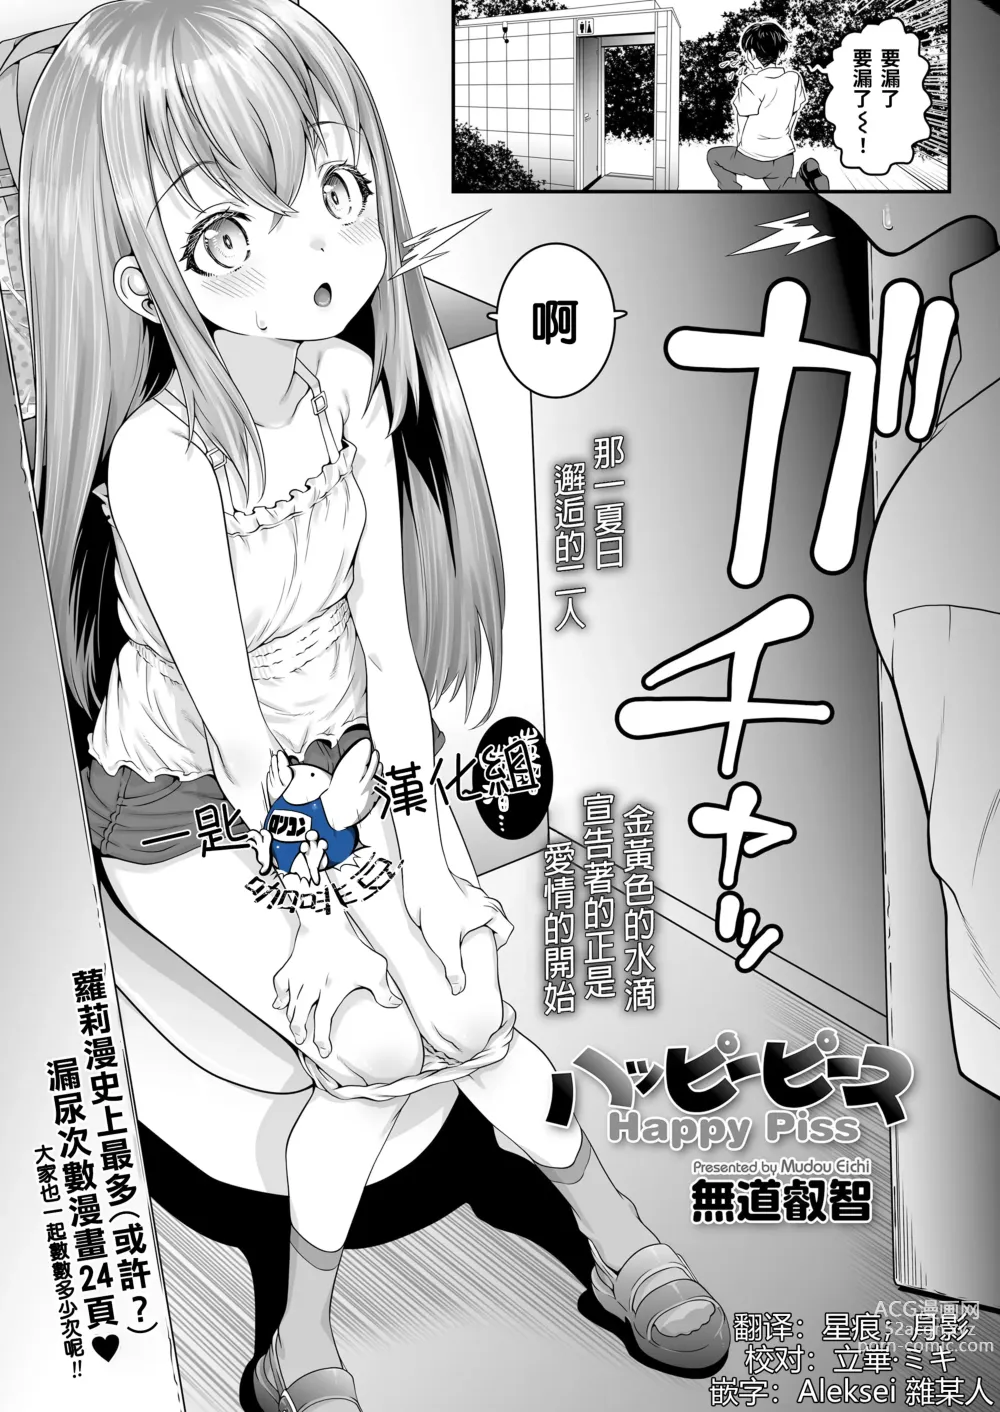 Page 1 of manga Happy Piss